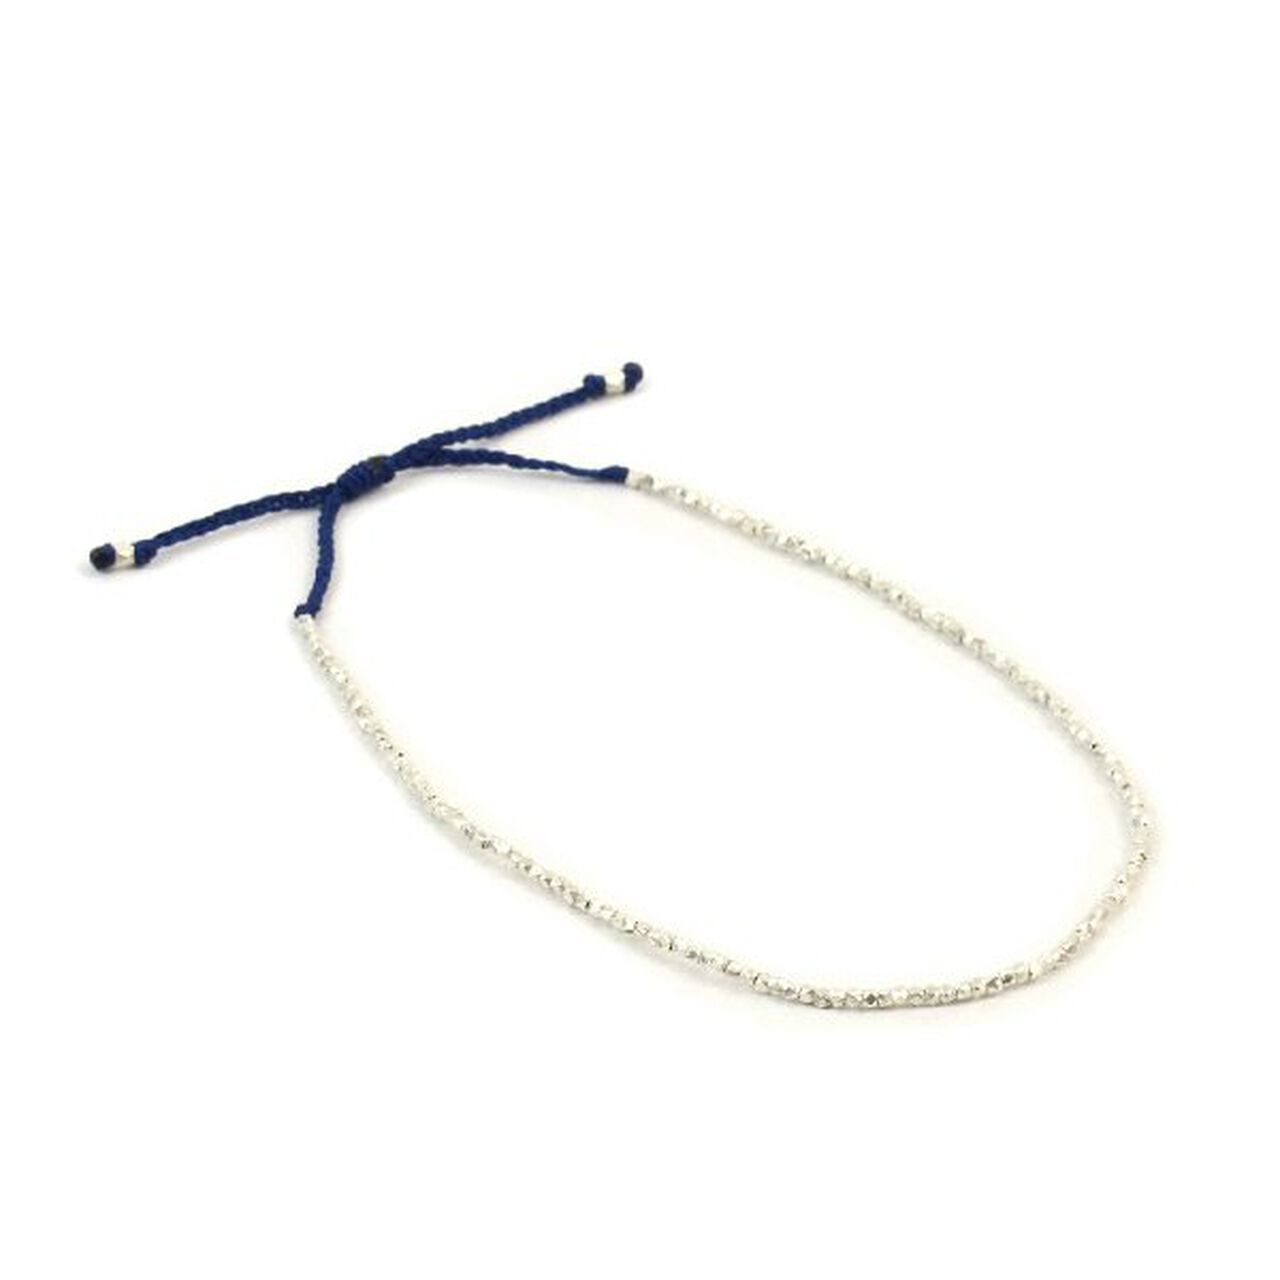 Karen Silver Beads Single Cord Anklet,Navy, large image number 0